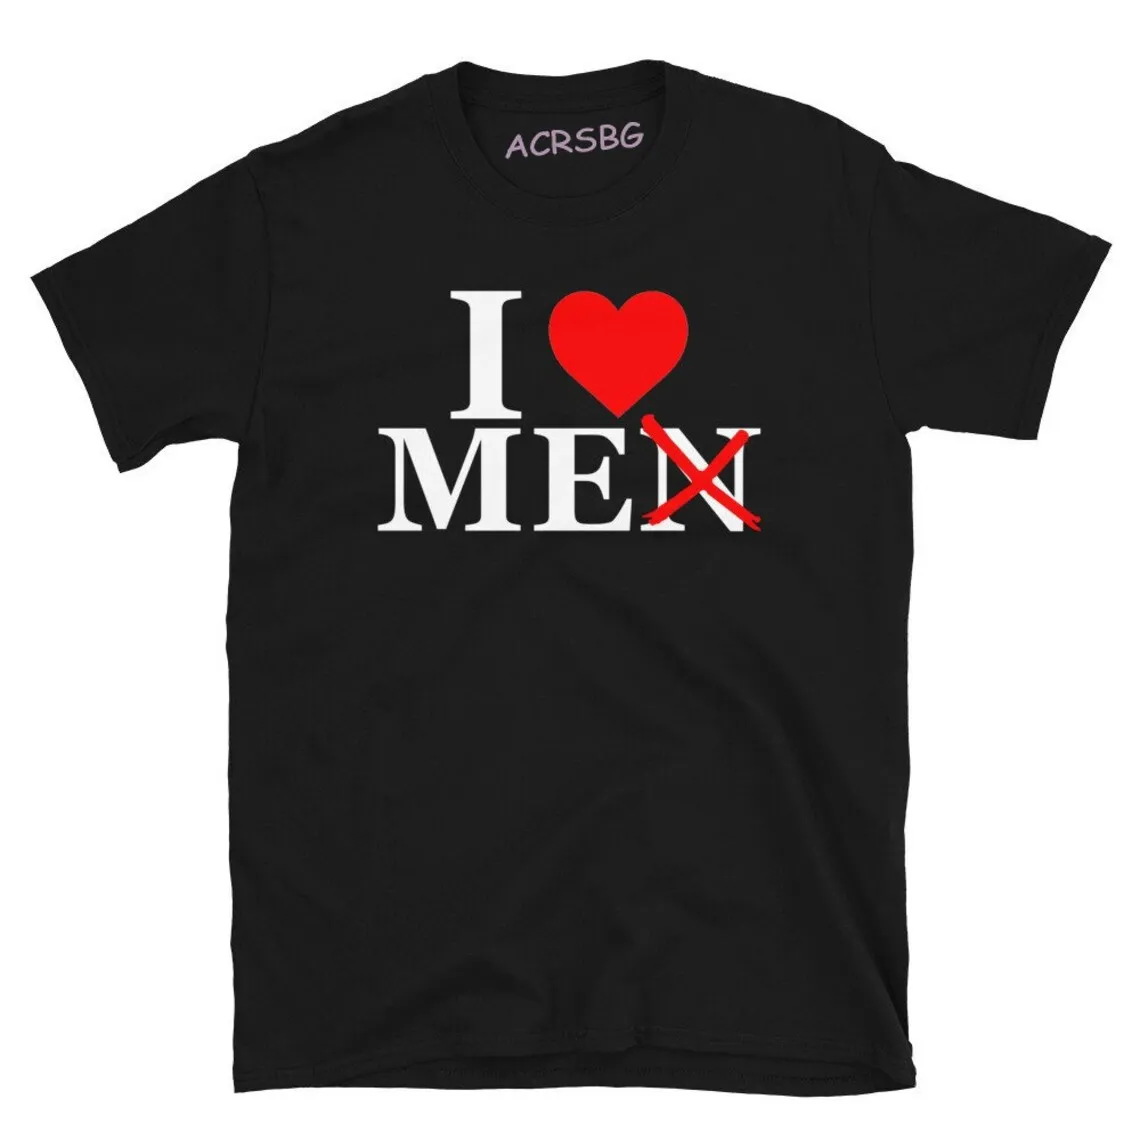 I Love Men Me Funny T Shirts Men Heart Print Tee Shirts Unisex Premium Cotton Fashion Sportswear Breathable Tops Clothes